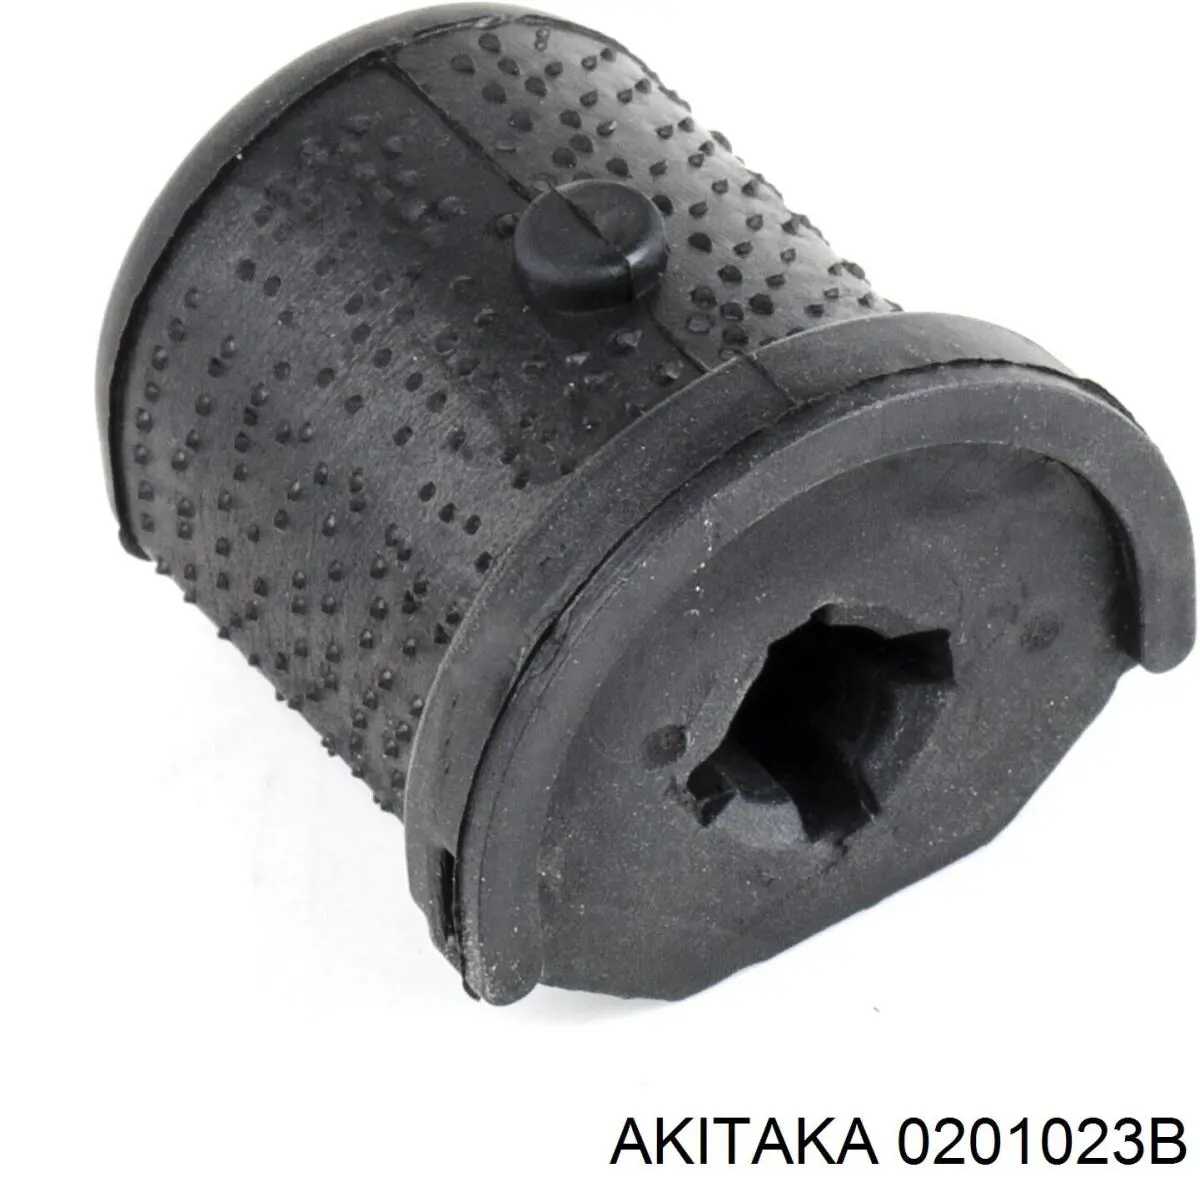 0201023B Akitaka bloco silencioso dianteiro do braço oscilante inferior